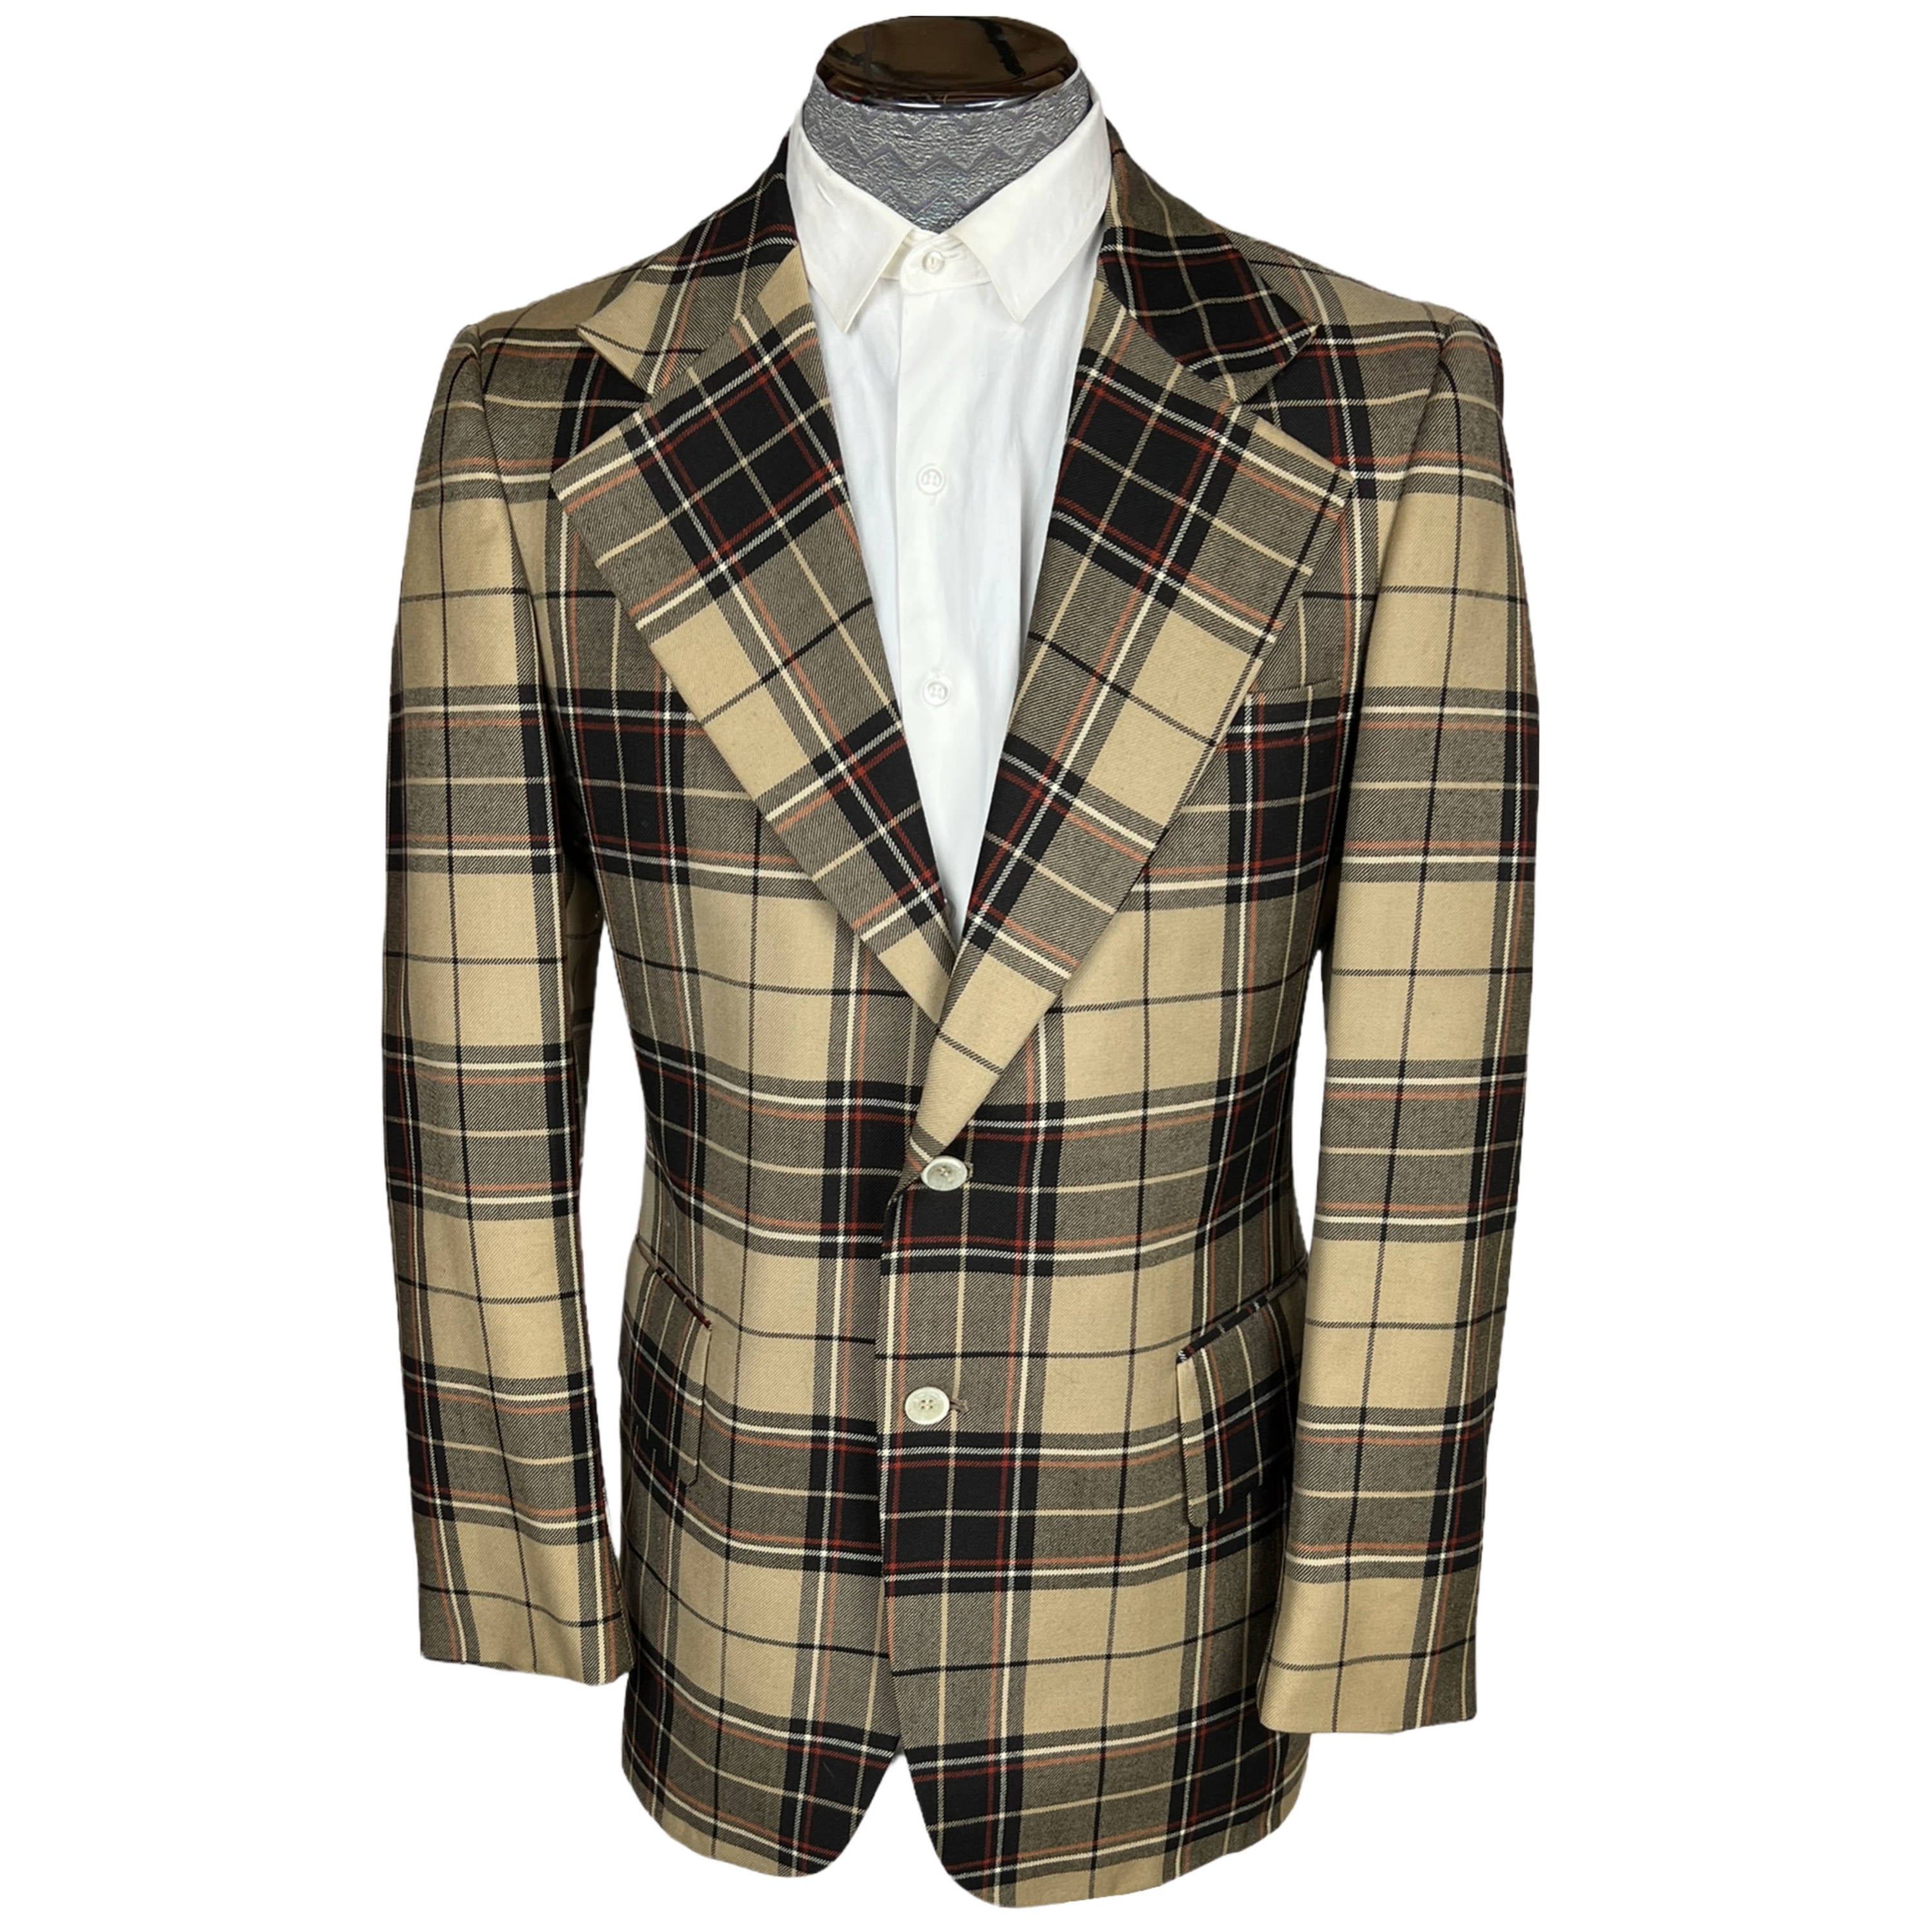 1970s Vintage Plaid Wool Jacket Blazer Sport Coat Size M